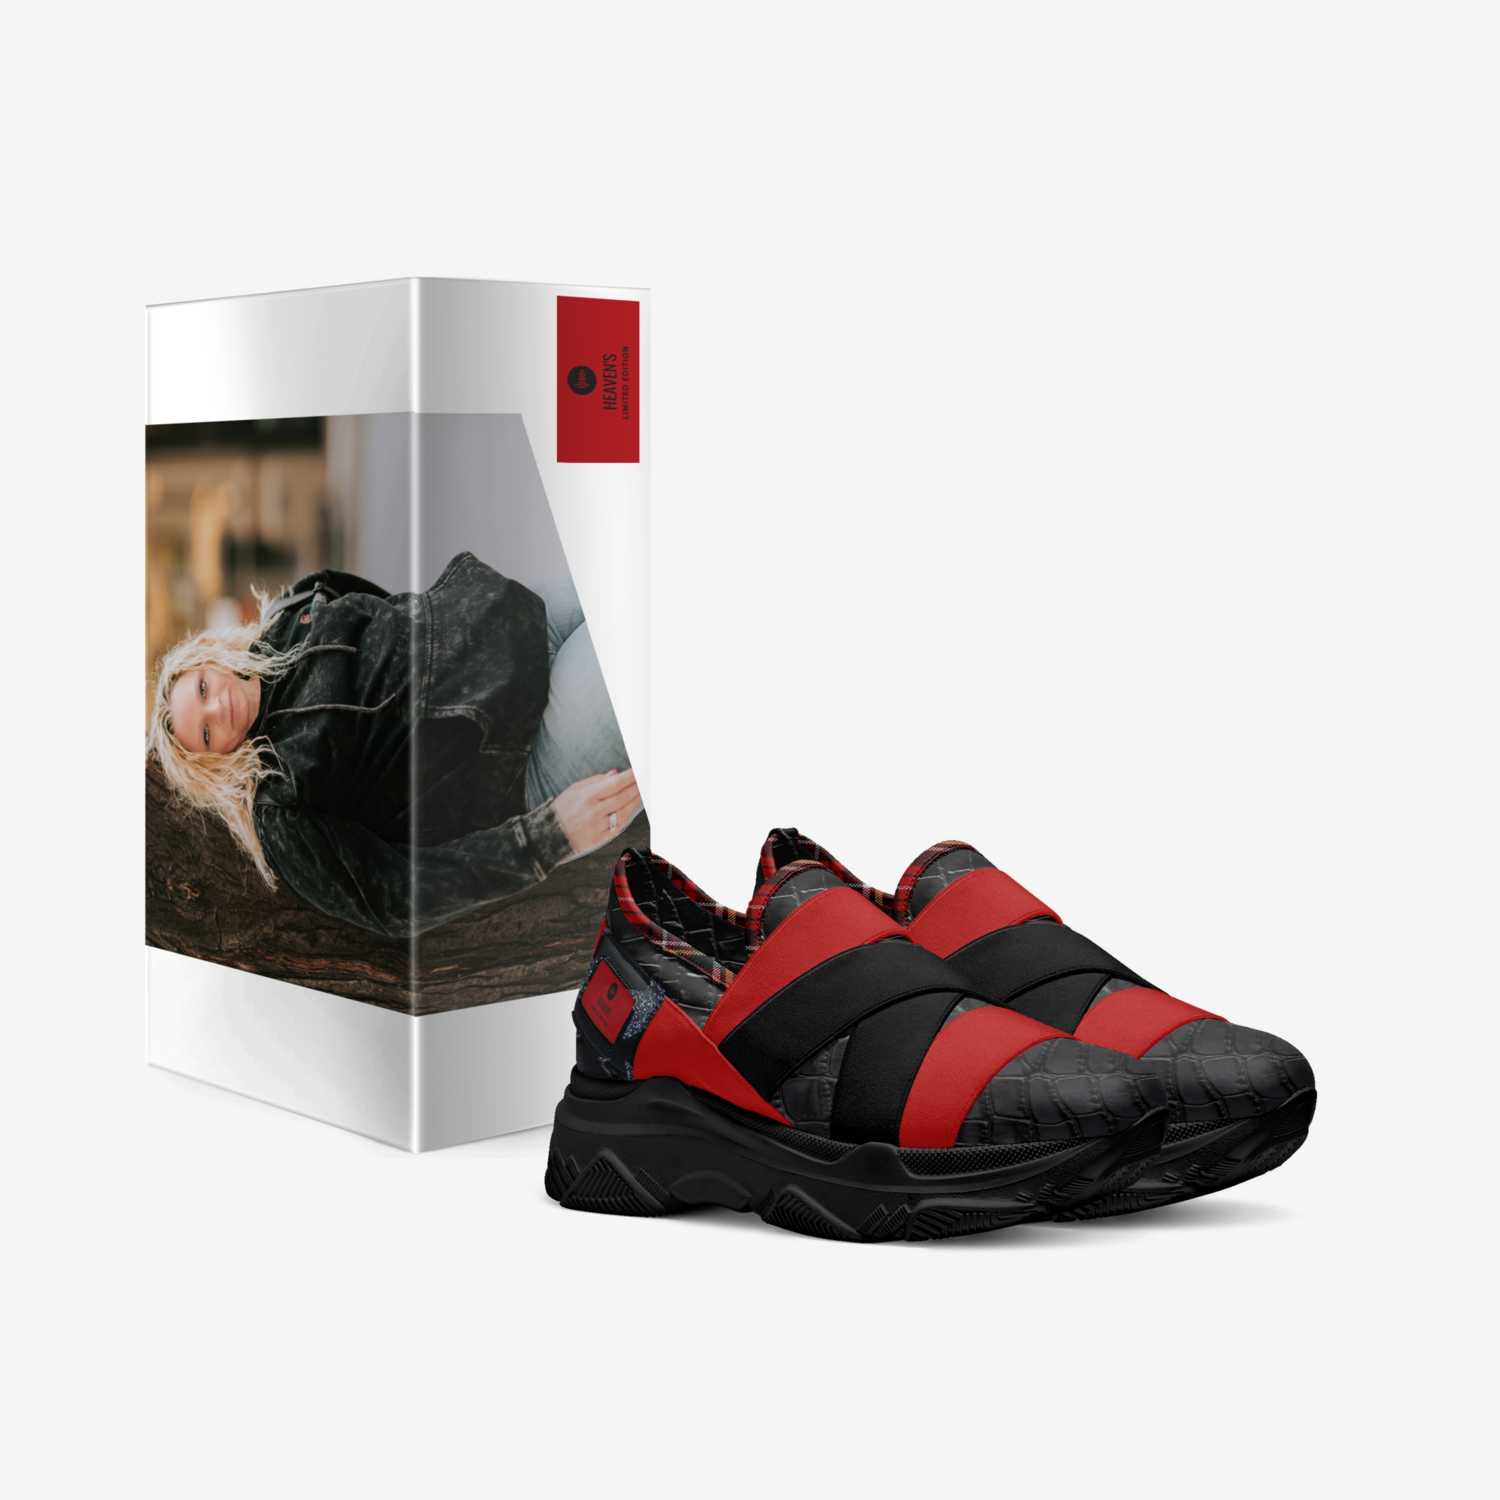 Heaven's custom made in Italy shoes by Joe Jarman | Box view